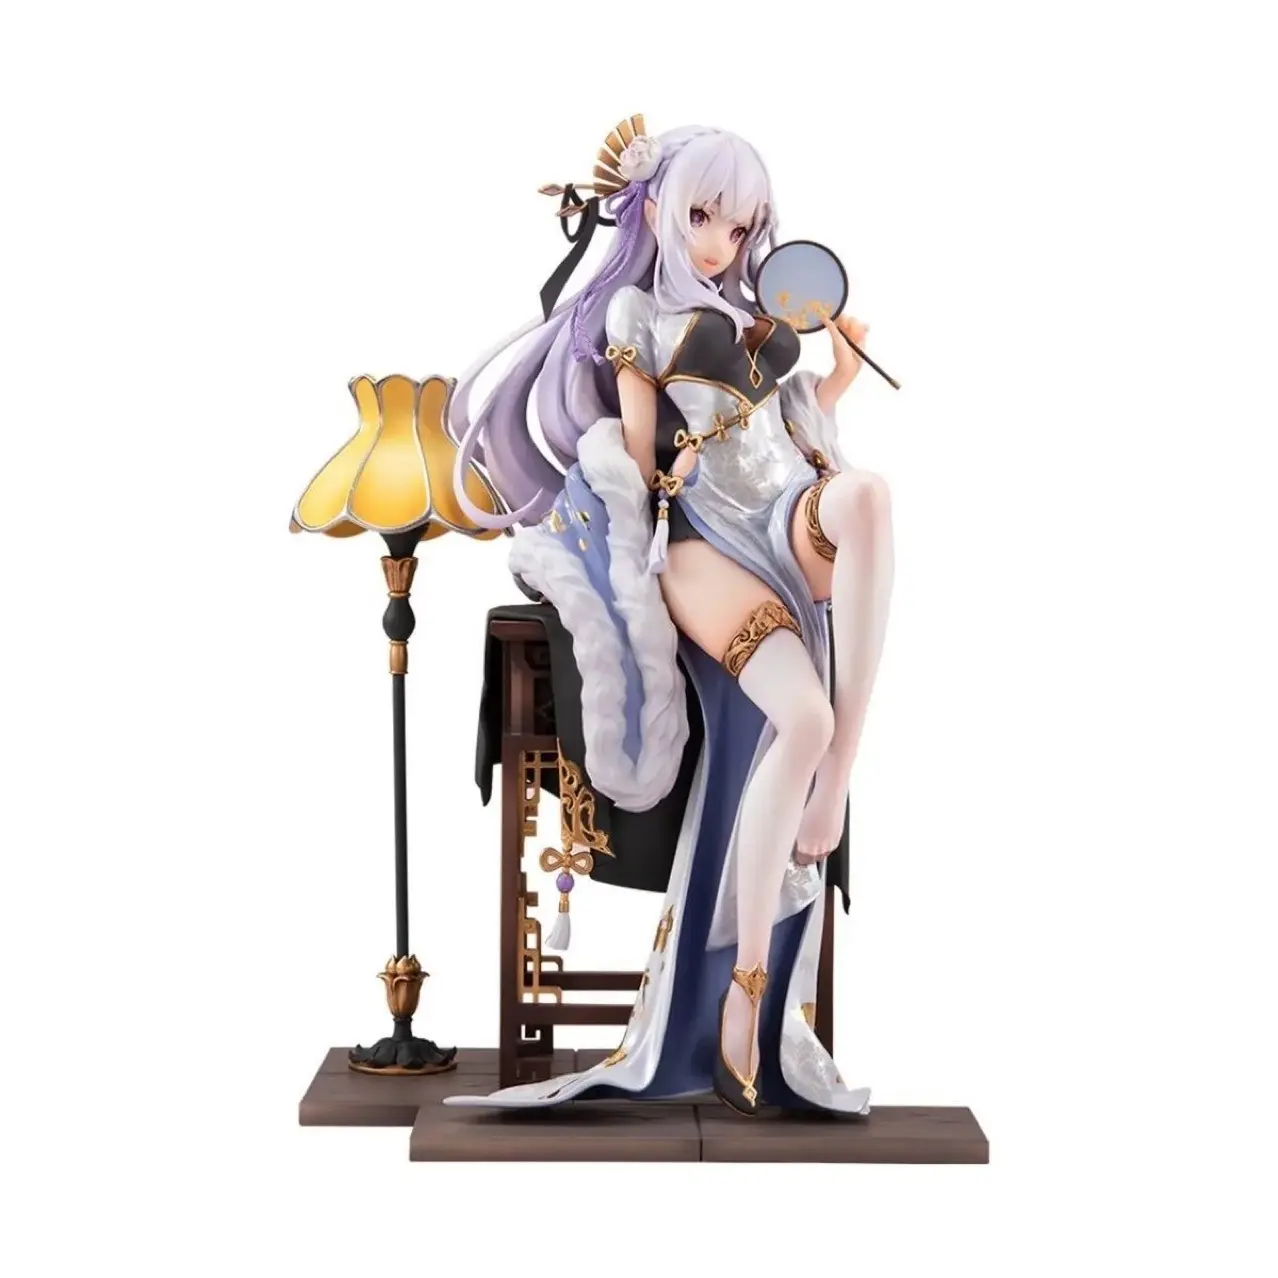 Daftar baru Model Action Figure Jepang tokoh Anime seksi koleksi mainan vinil dibuat sesuai pesanan seniman Anime kustom Pvc